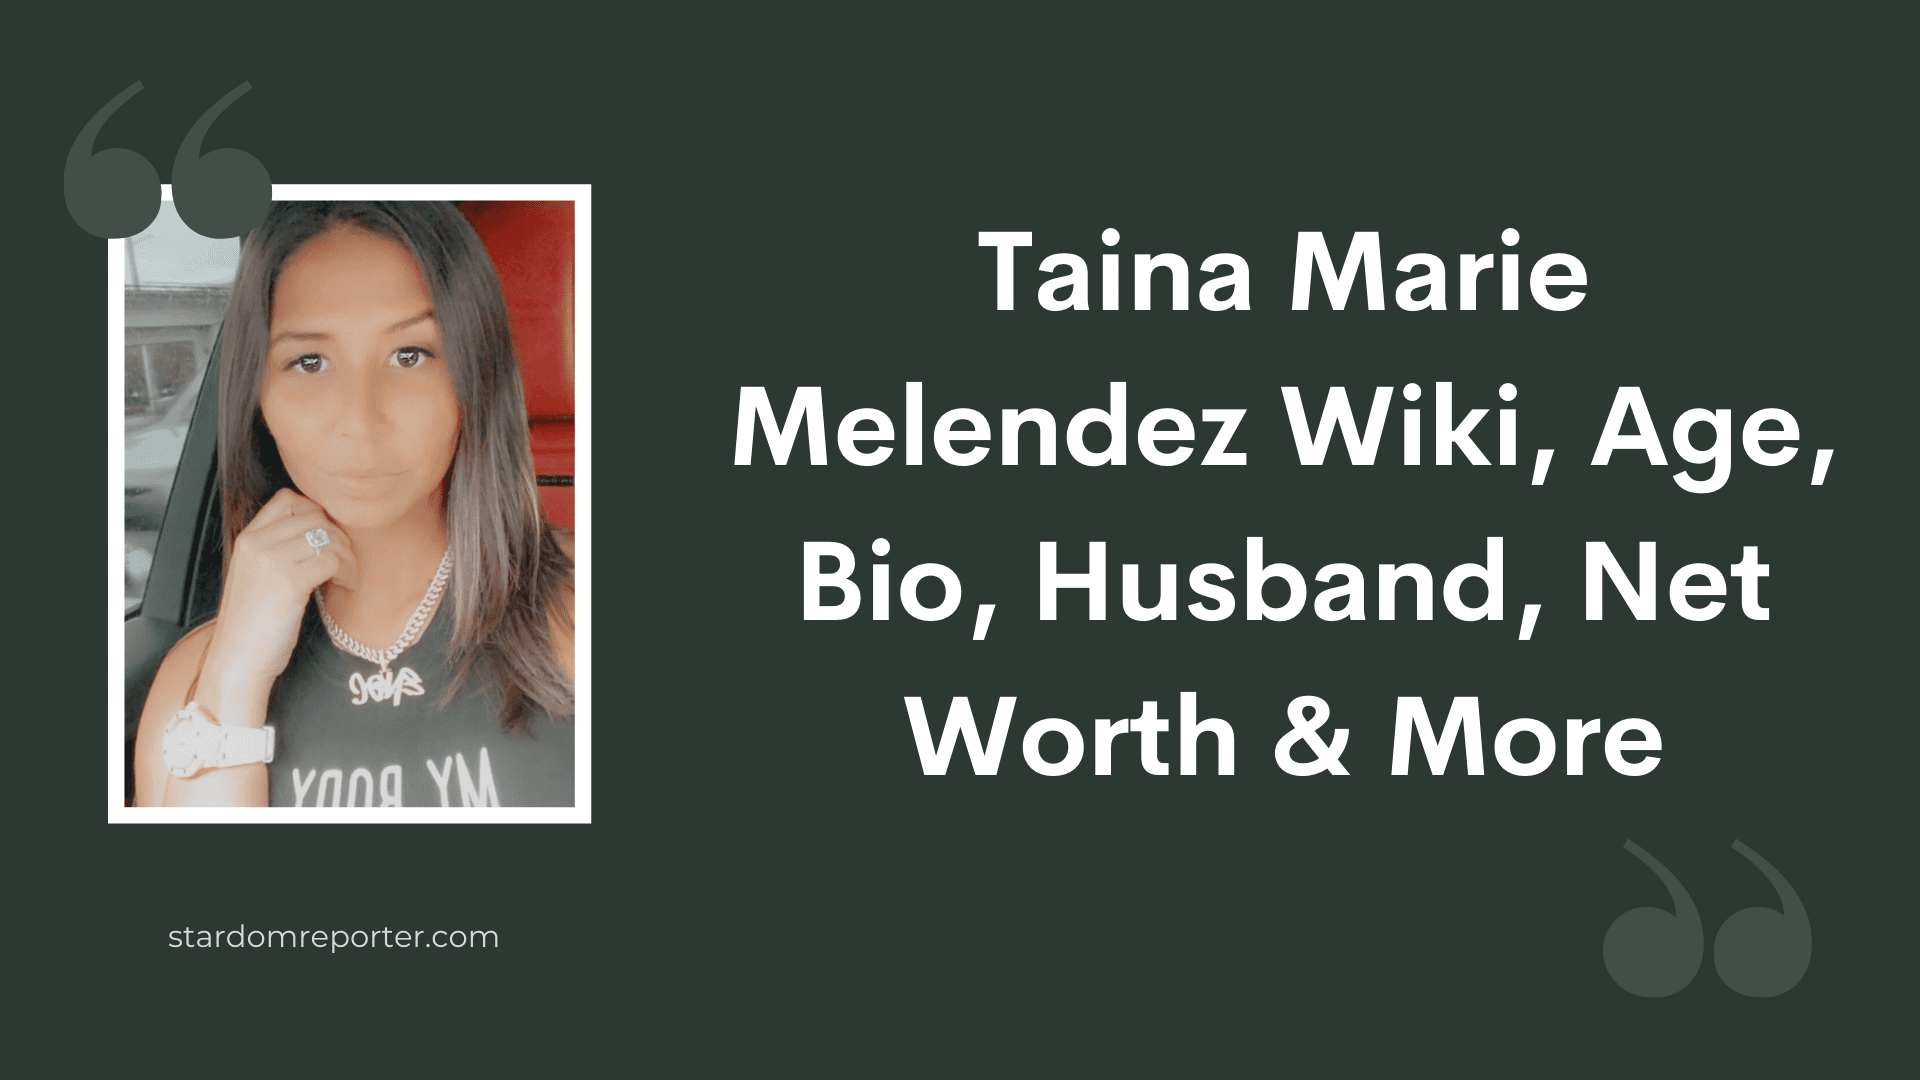 Taina Marie Melendez Wiki, Age, Bio, Husband, Net Worth & More - 31